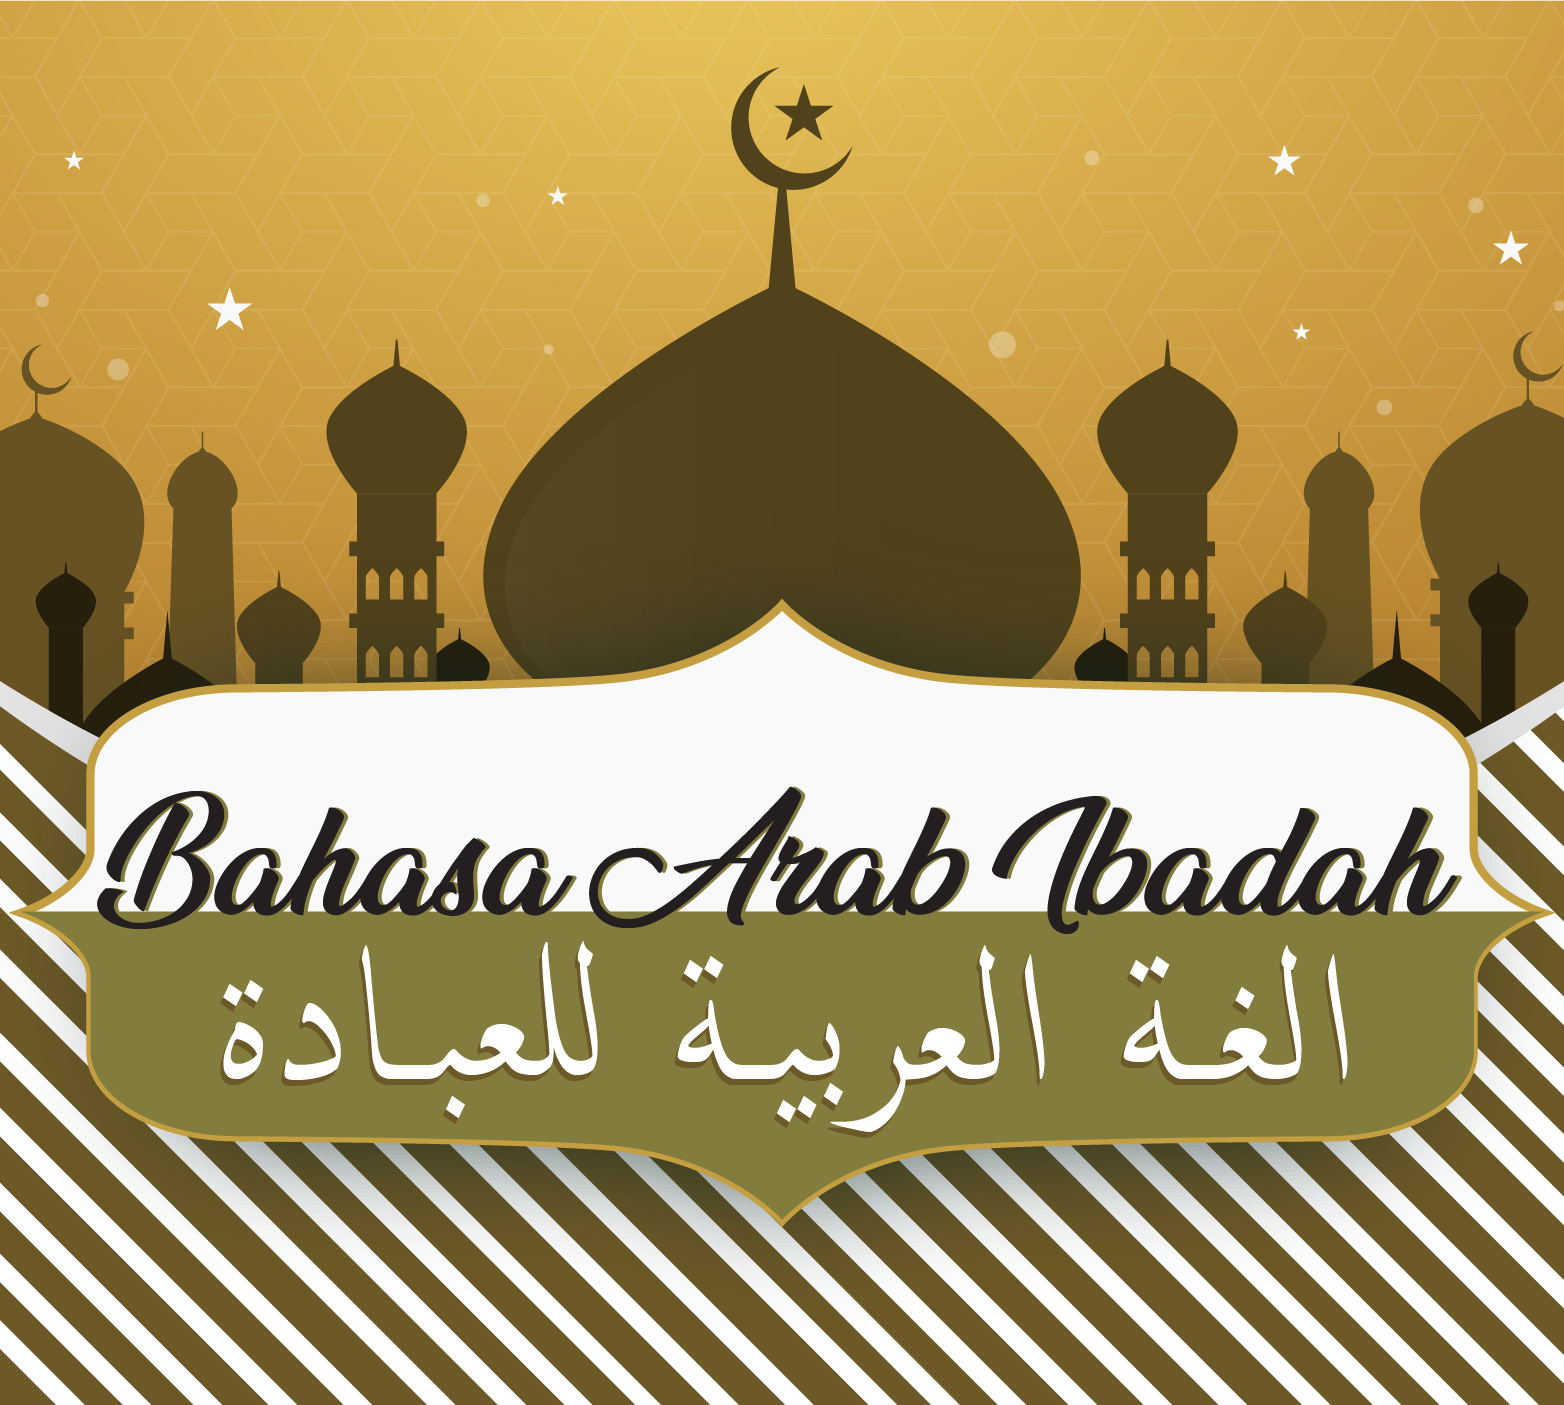 BAHASA ARAB IBADAH